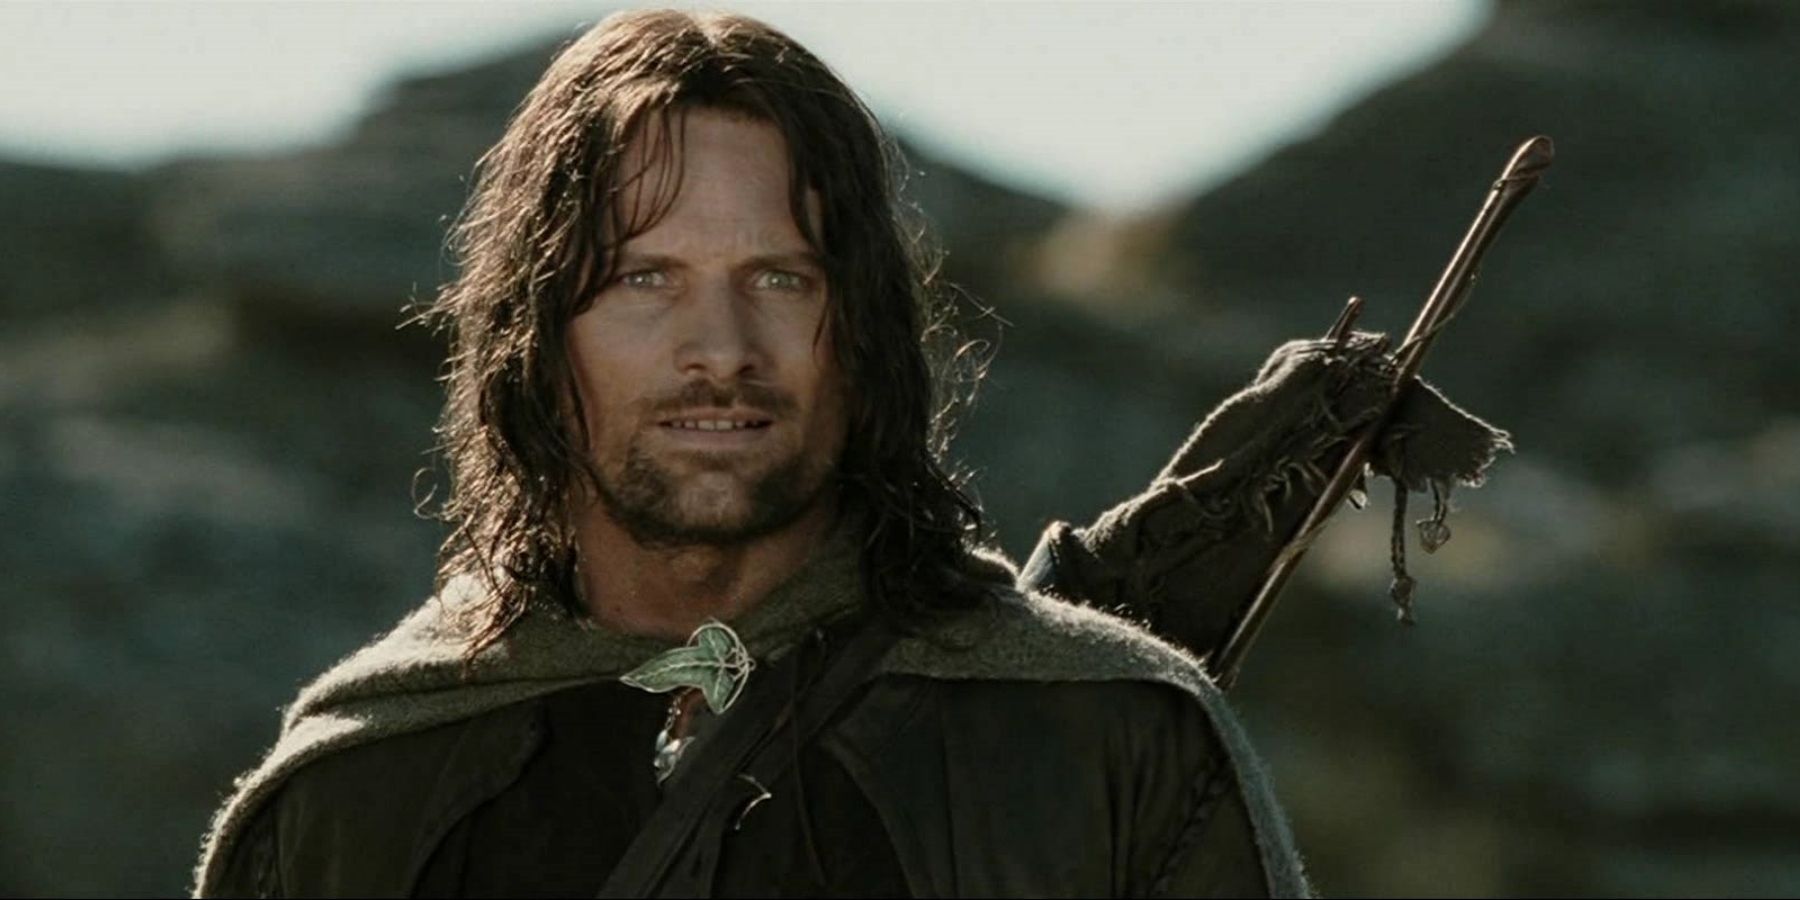 Aragorn the ranger